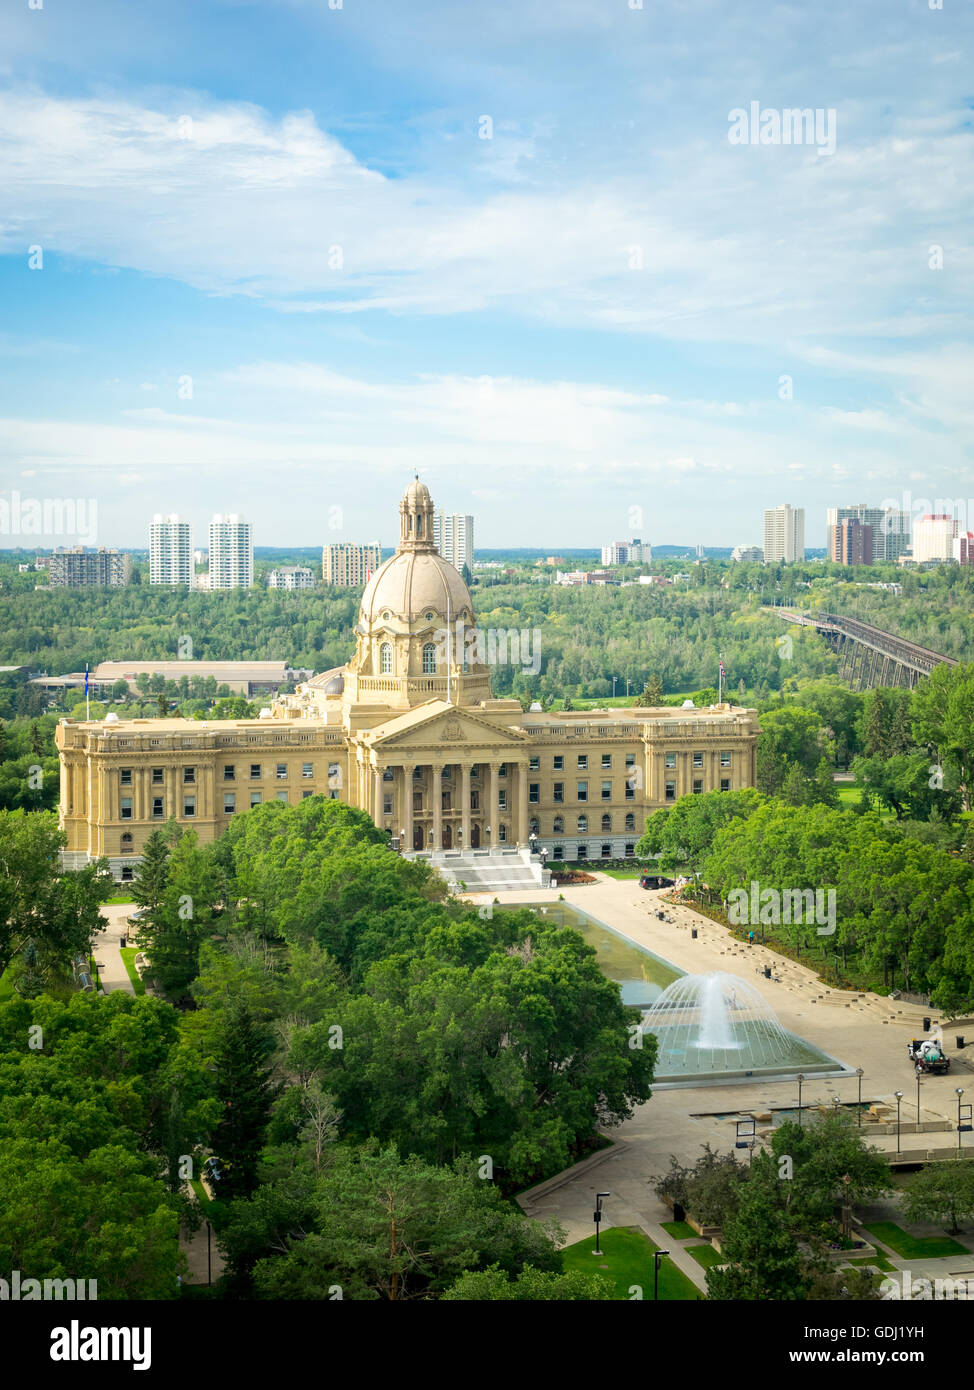 An aerial view of the Alberta Legislature Building, Alberta Legislature Grounds and High Level Bridge in Edmonton, Canada. Stock Photo